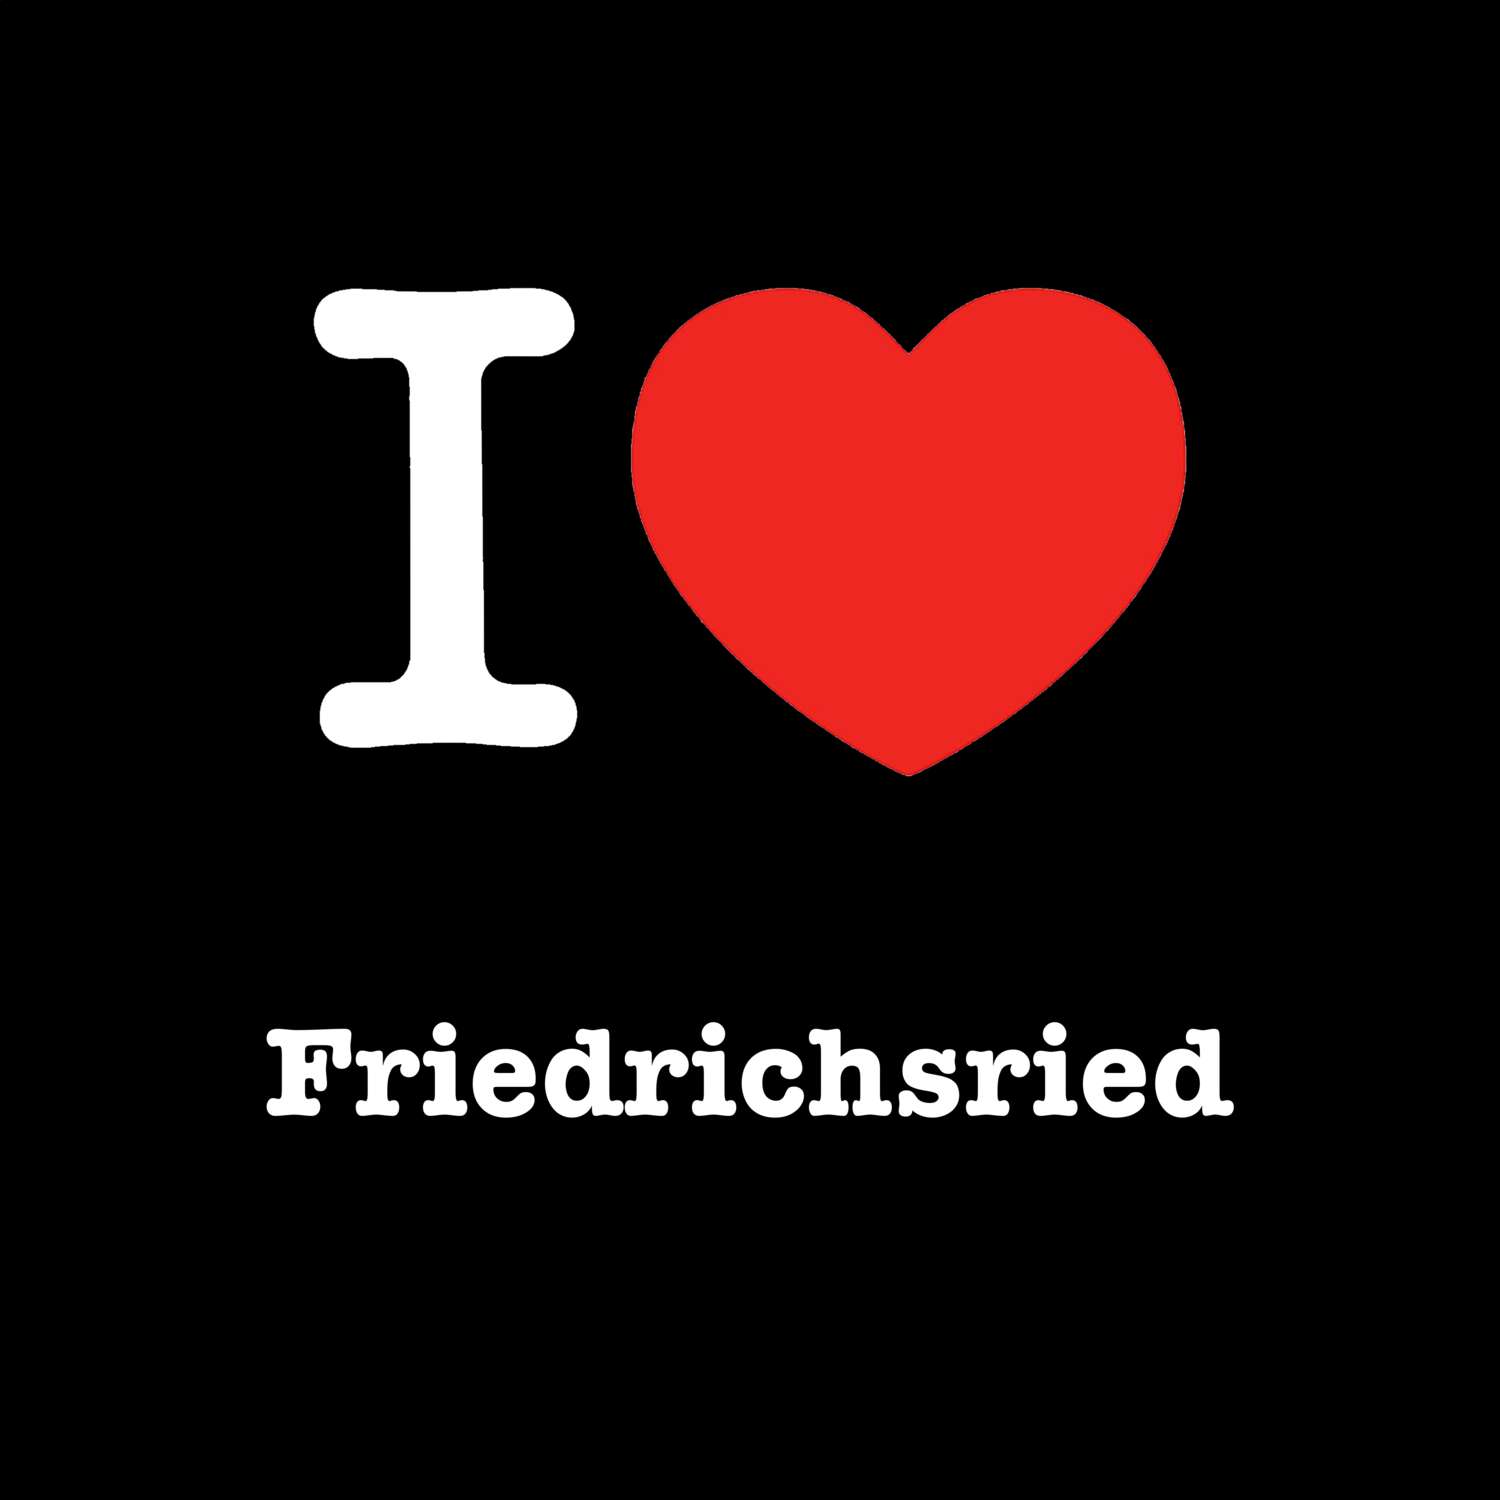 Friedrichsried T-Shirt »I love«